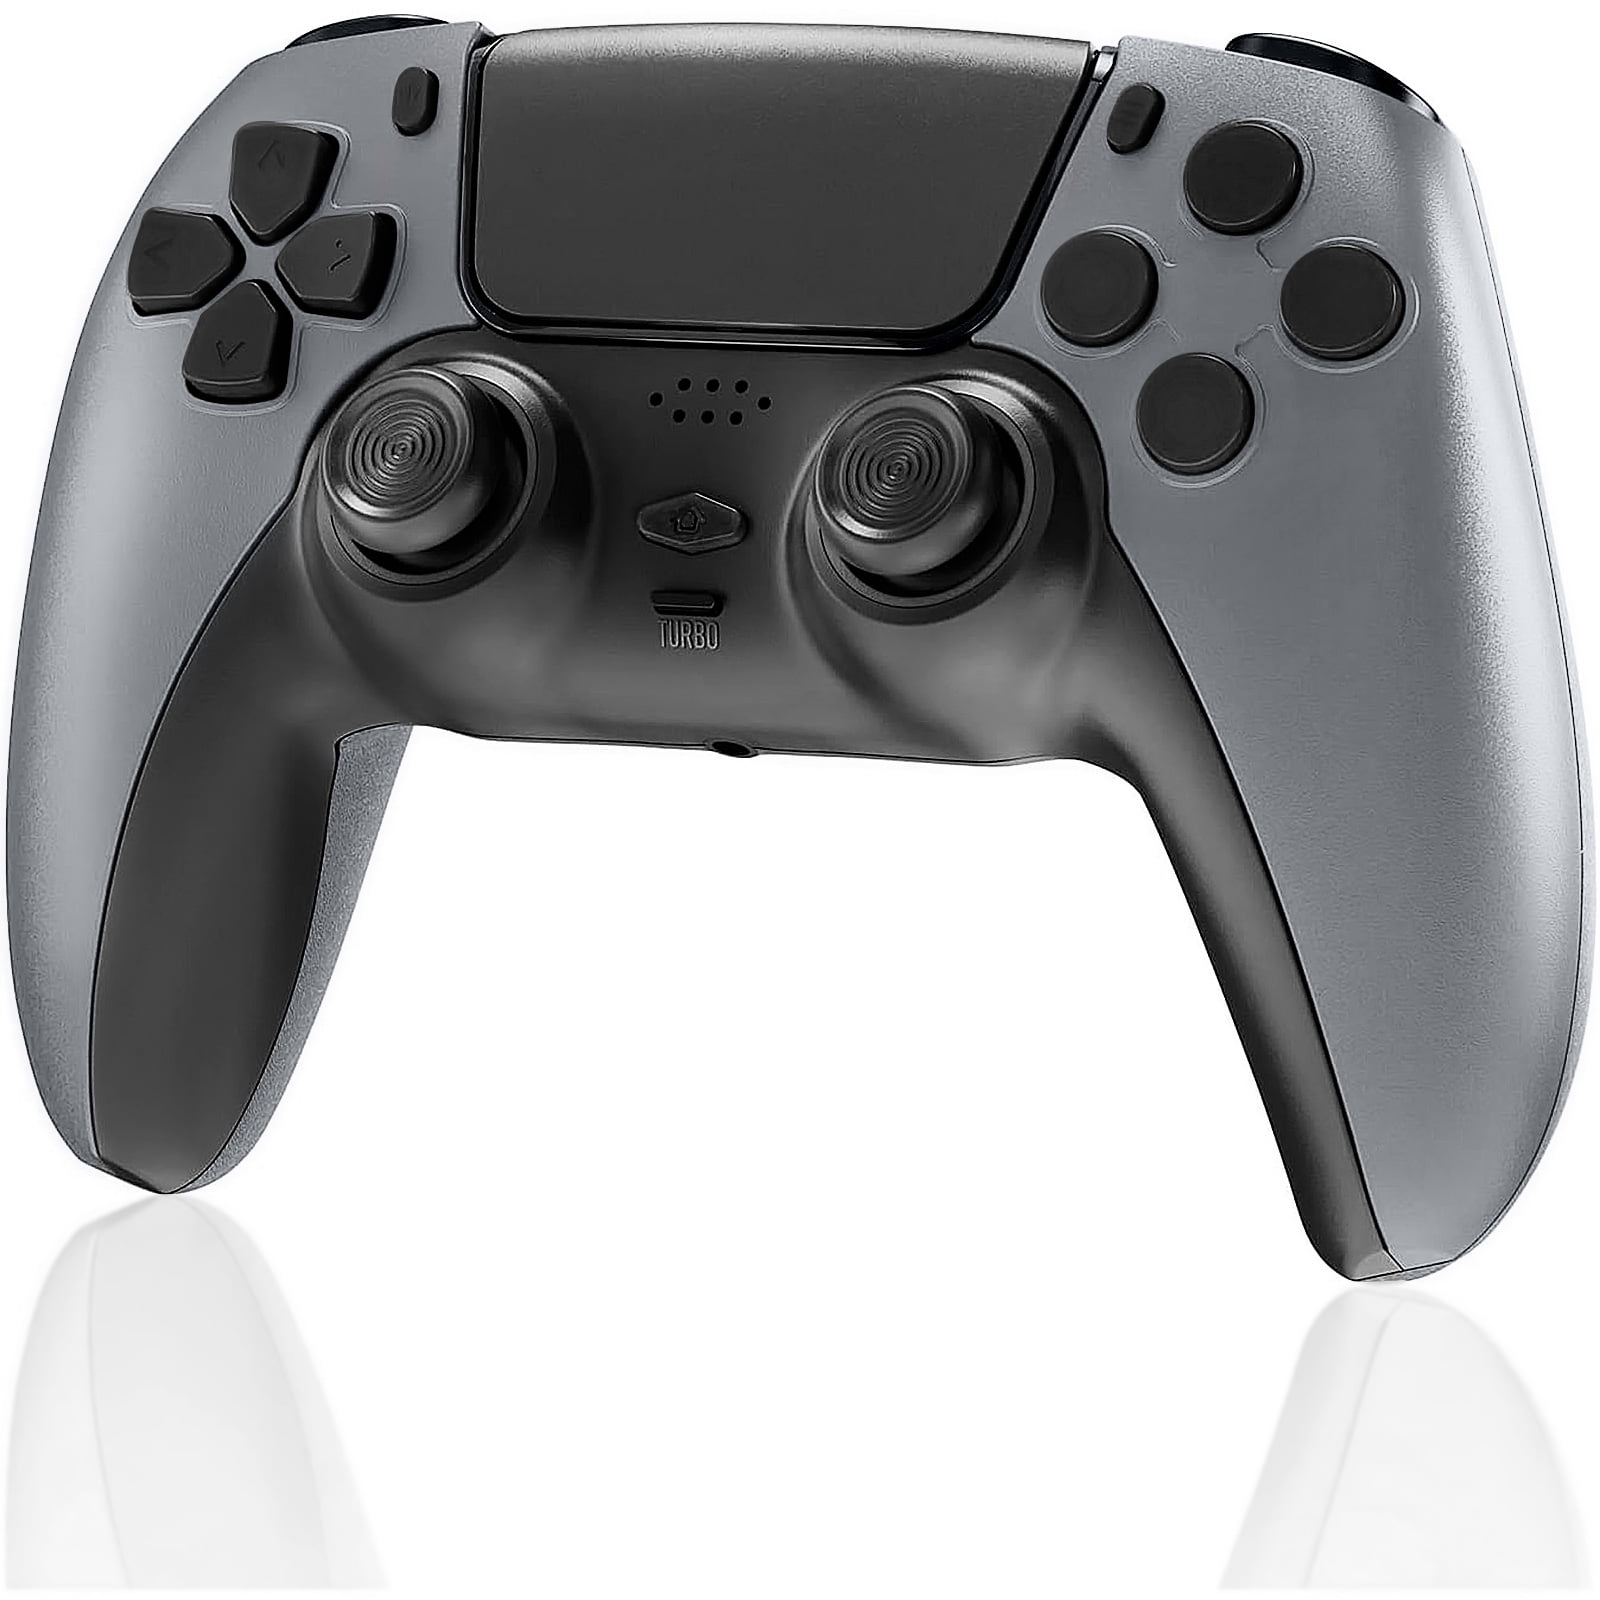 SPBPQY Wireless Game Controller PS4/PS4 Slim - Steel Grey - Walmart.com